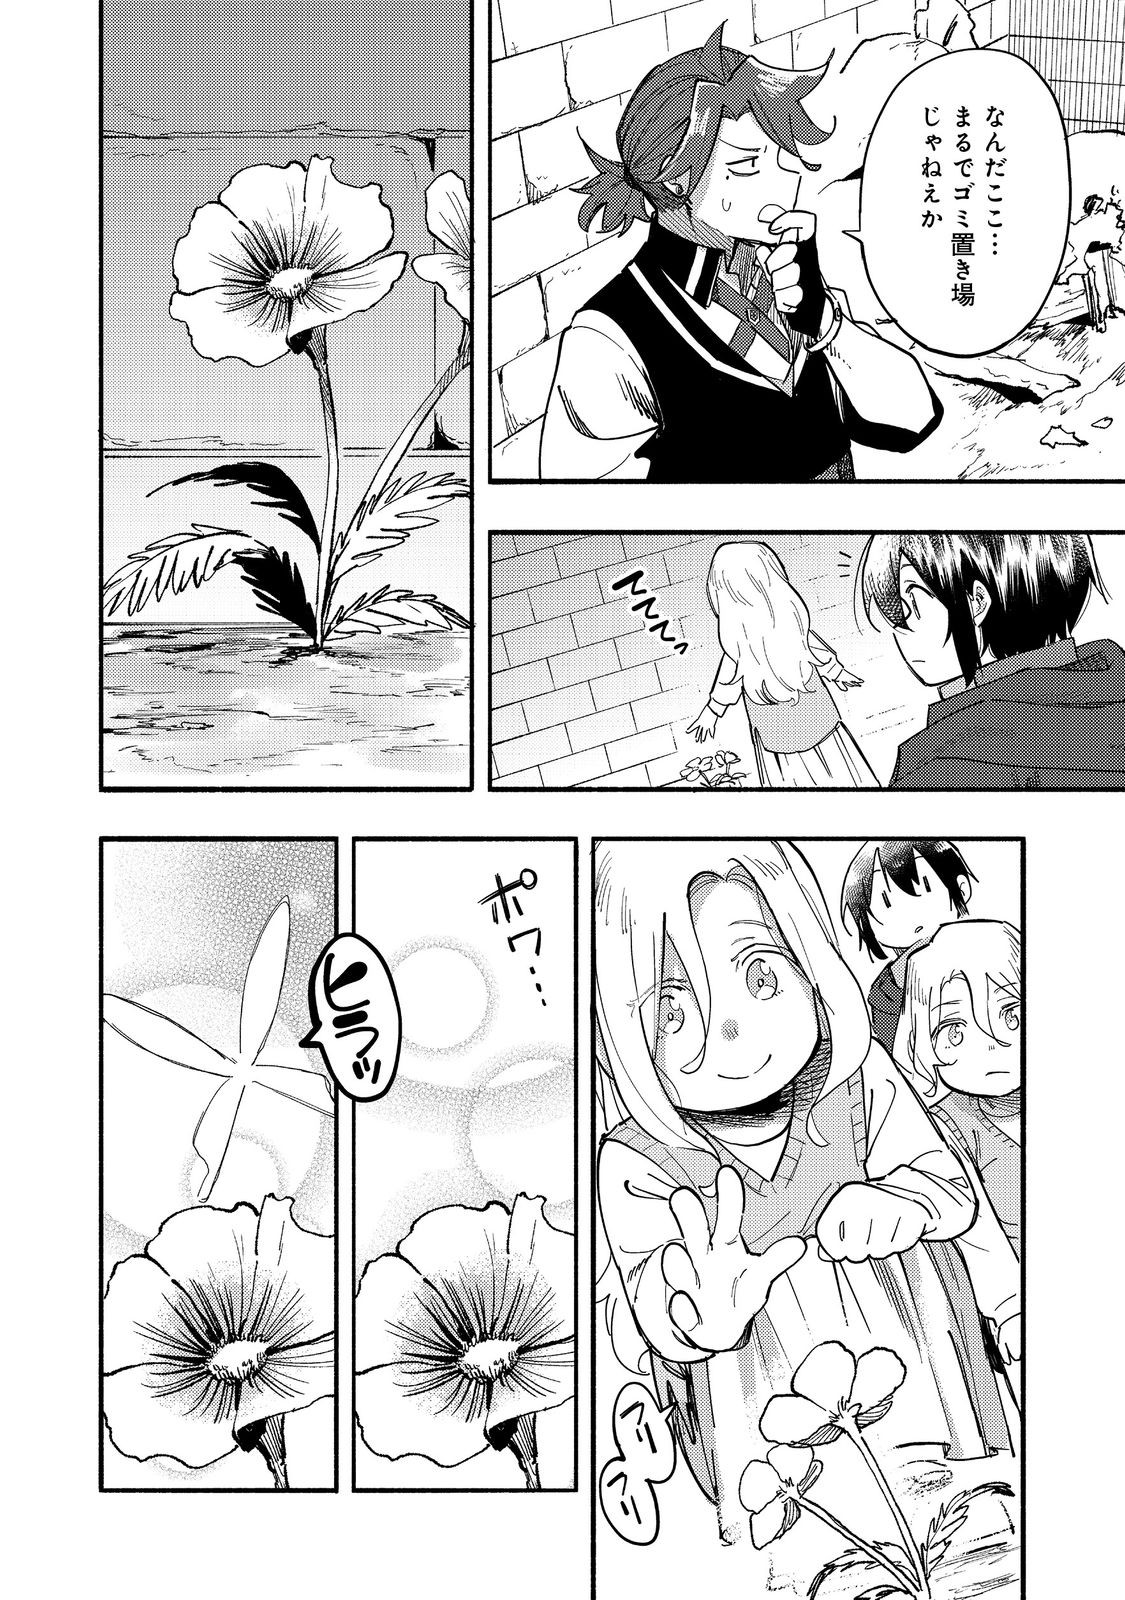 Kyou mo E ni Kaita Mochi ga Umai - Chapter 27 - Page 6